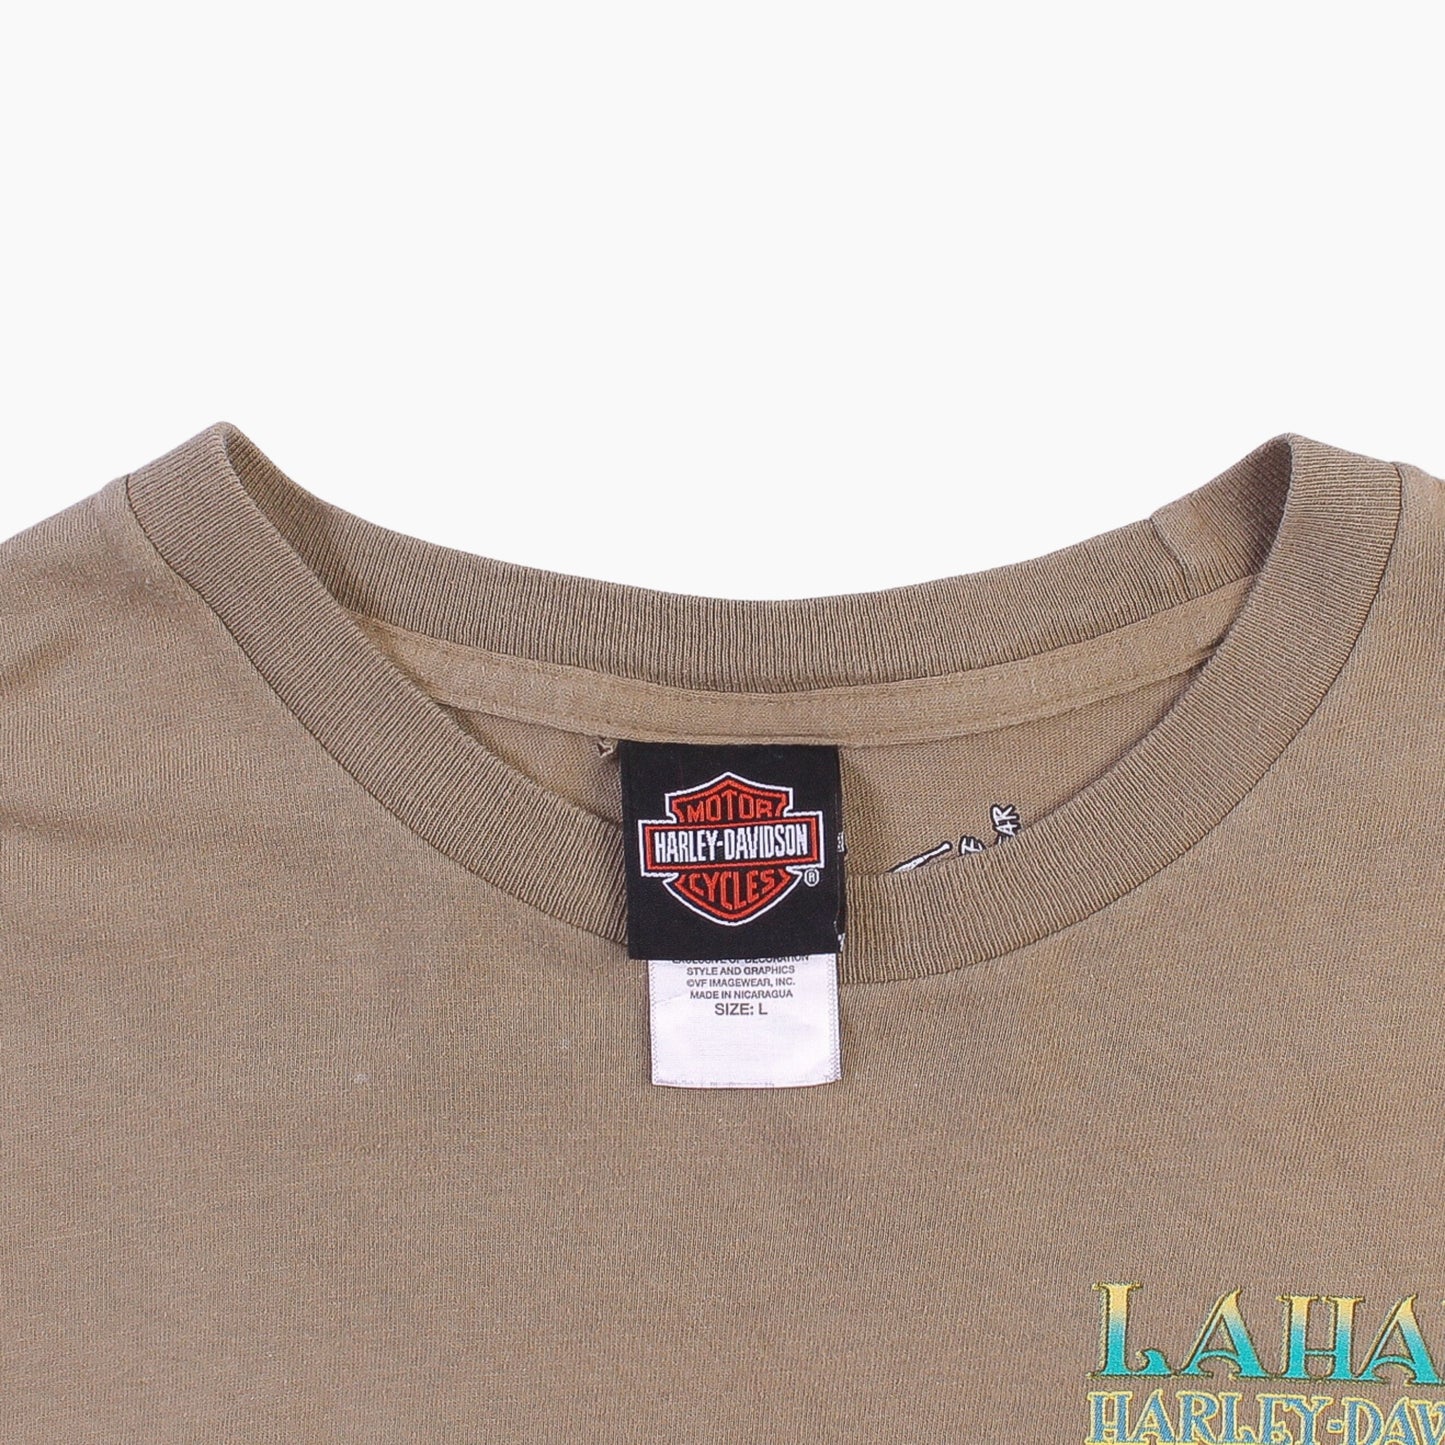 'Lahaina' T-Shirt - American Madness